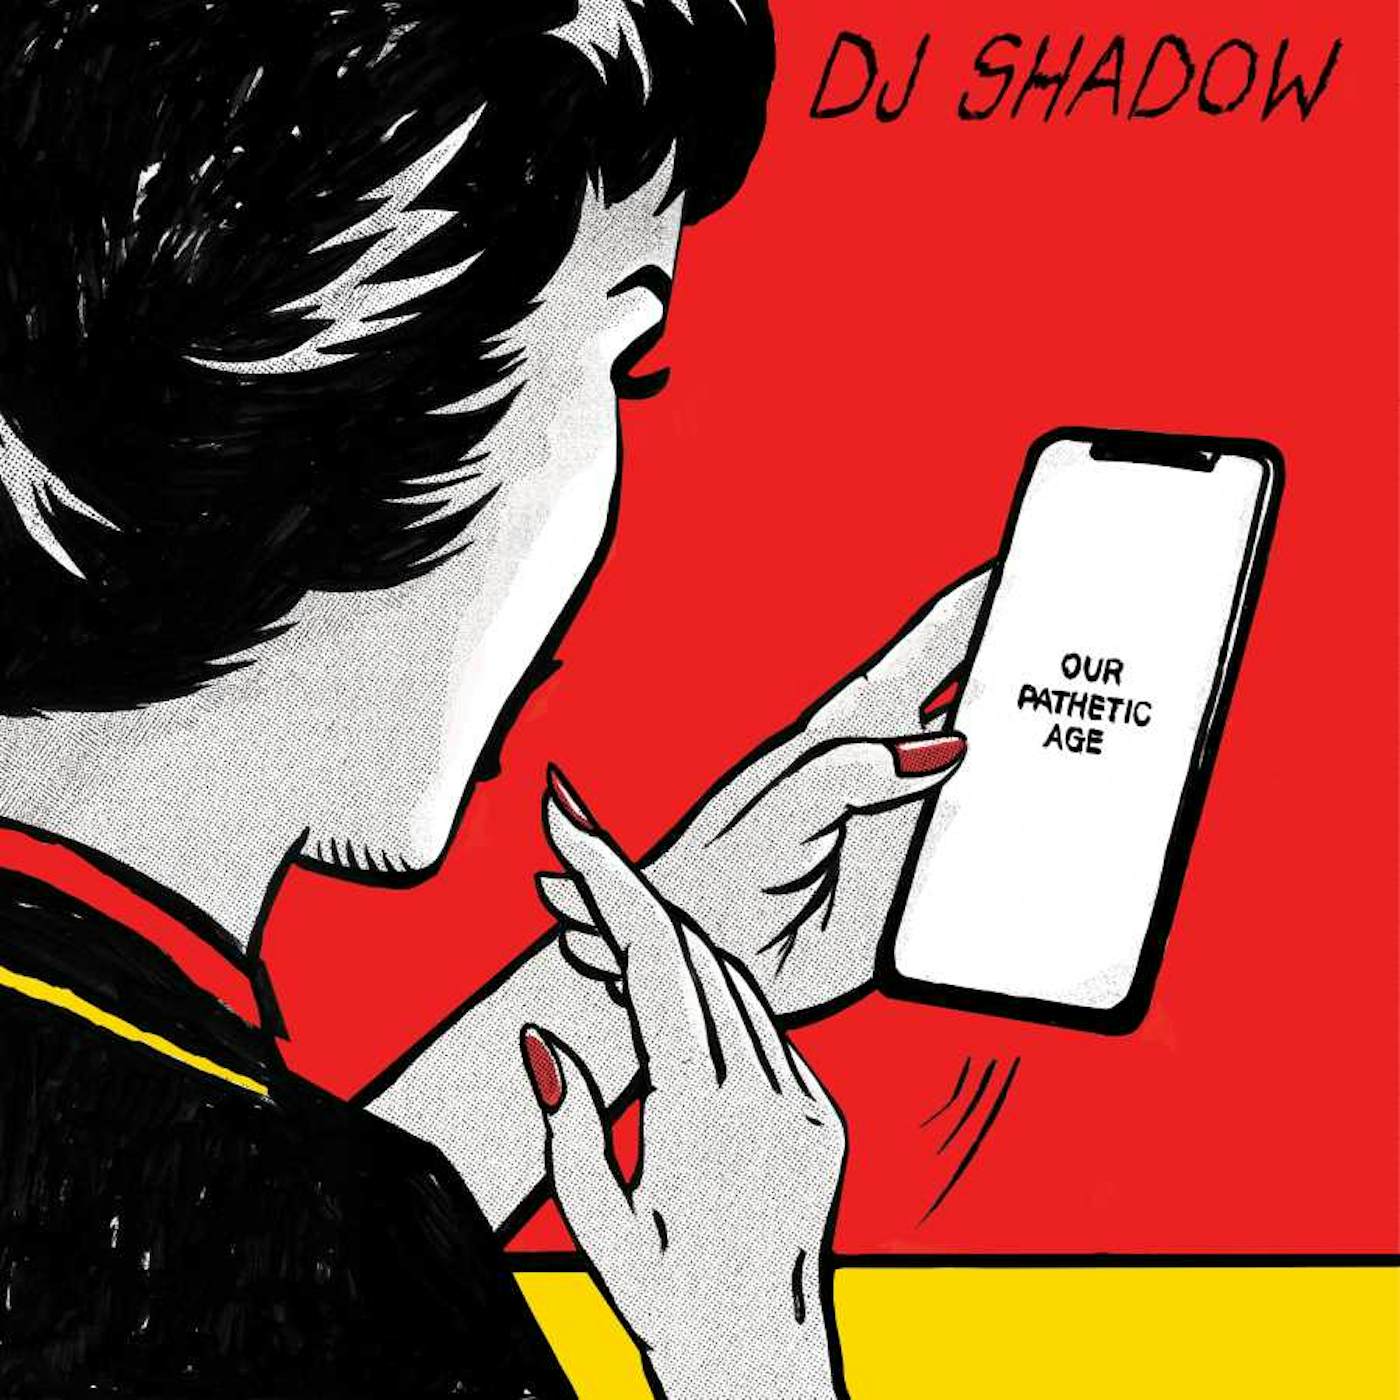 DJ Shadow OUR PATHETIC AGE (2 LP) Vinyl Record